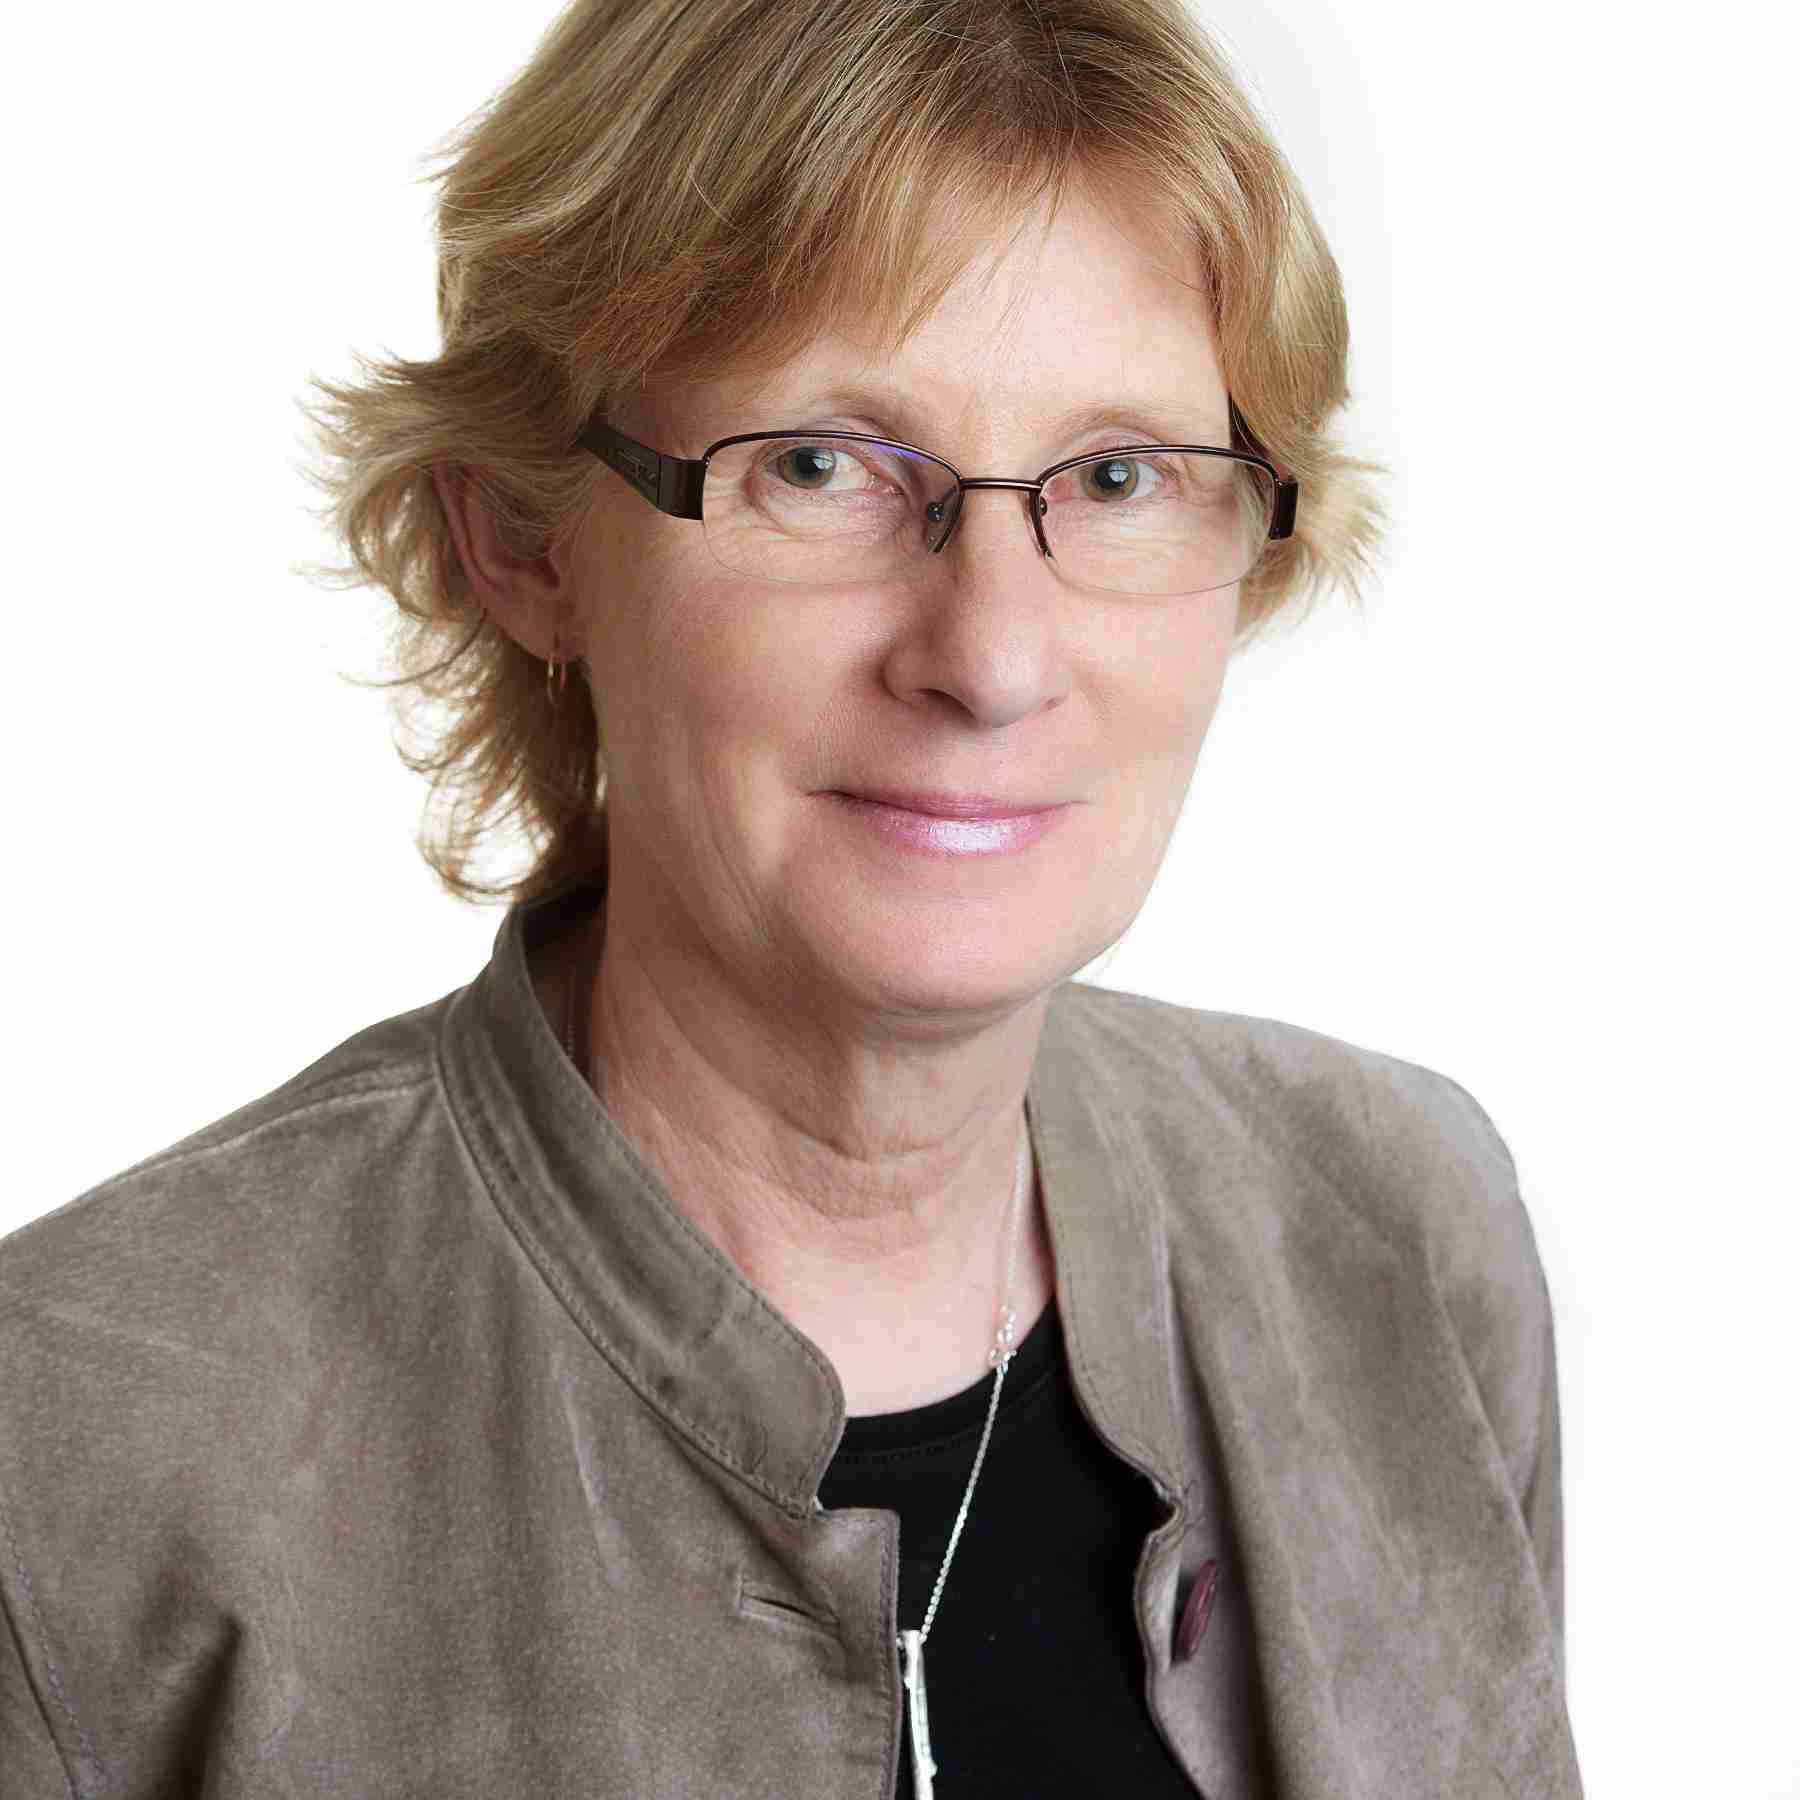 Profile image of Prof Alison Hammond